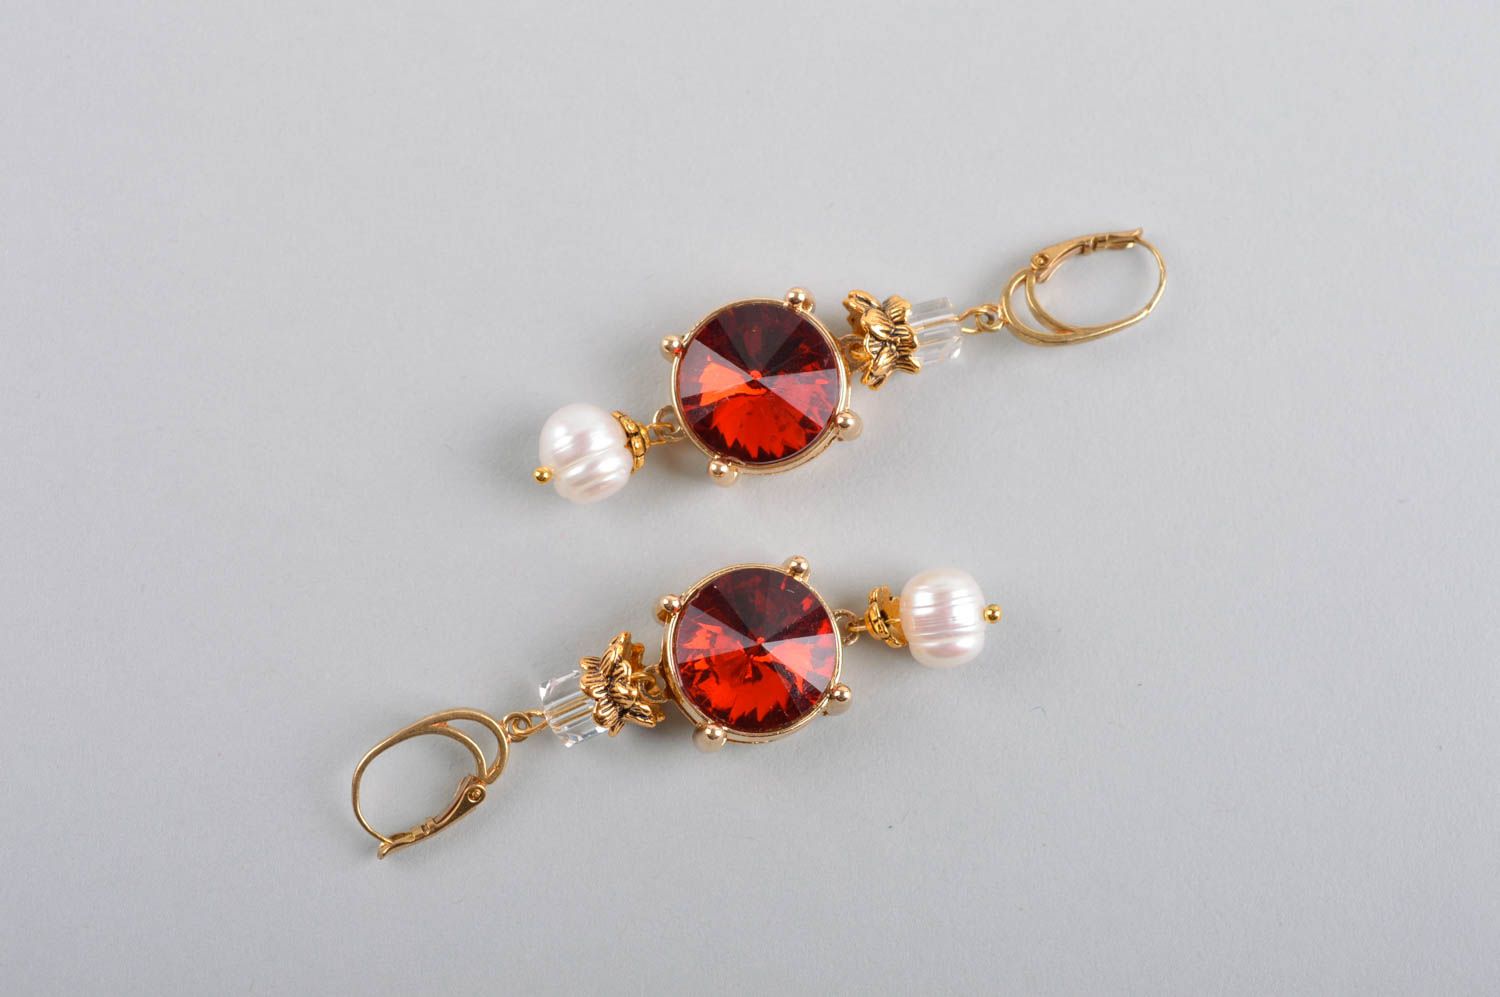 Handmade earrings designer accessories gemstone jewelry dangling earrings photo 5